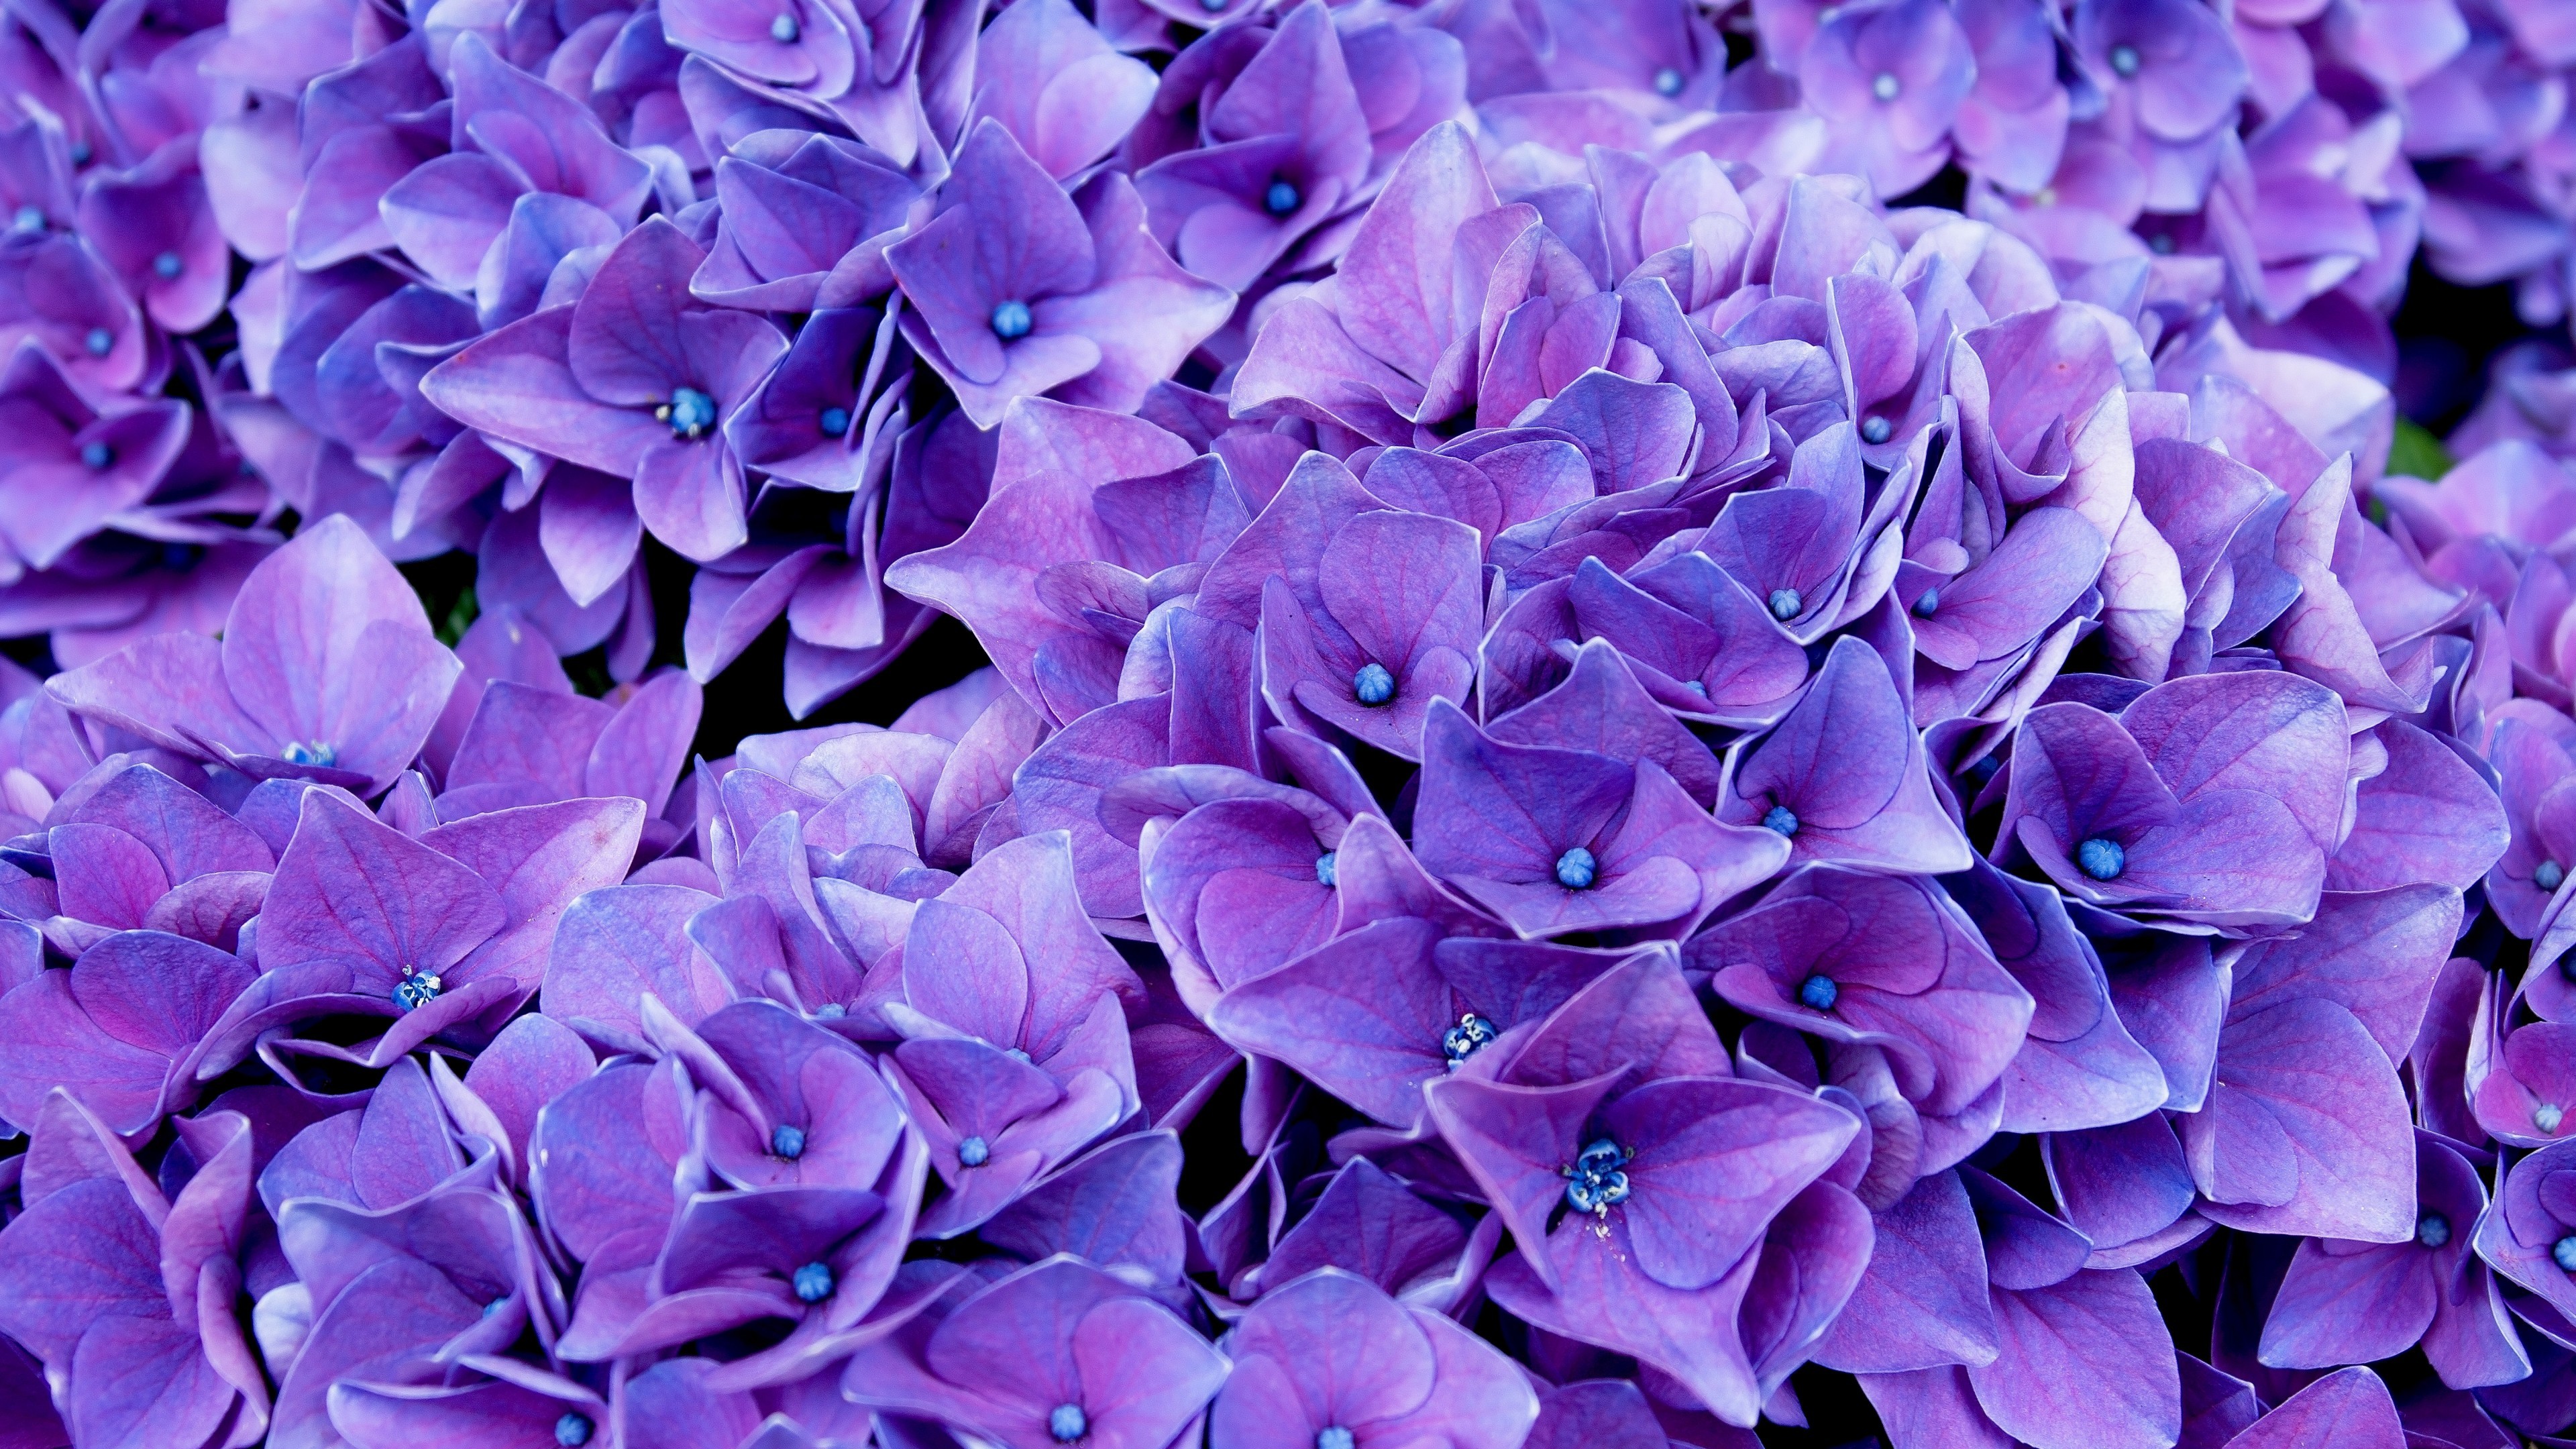 Lilac wallpaper light purple wallpaper lilac background pastel colors  purple aesthetic lilac aesthe l  Light purple wallpaper Iphone wallpaper  Purple wallpaper